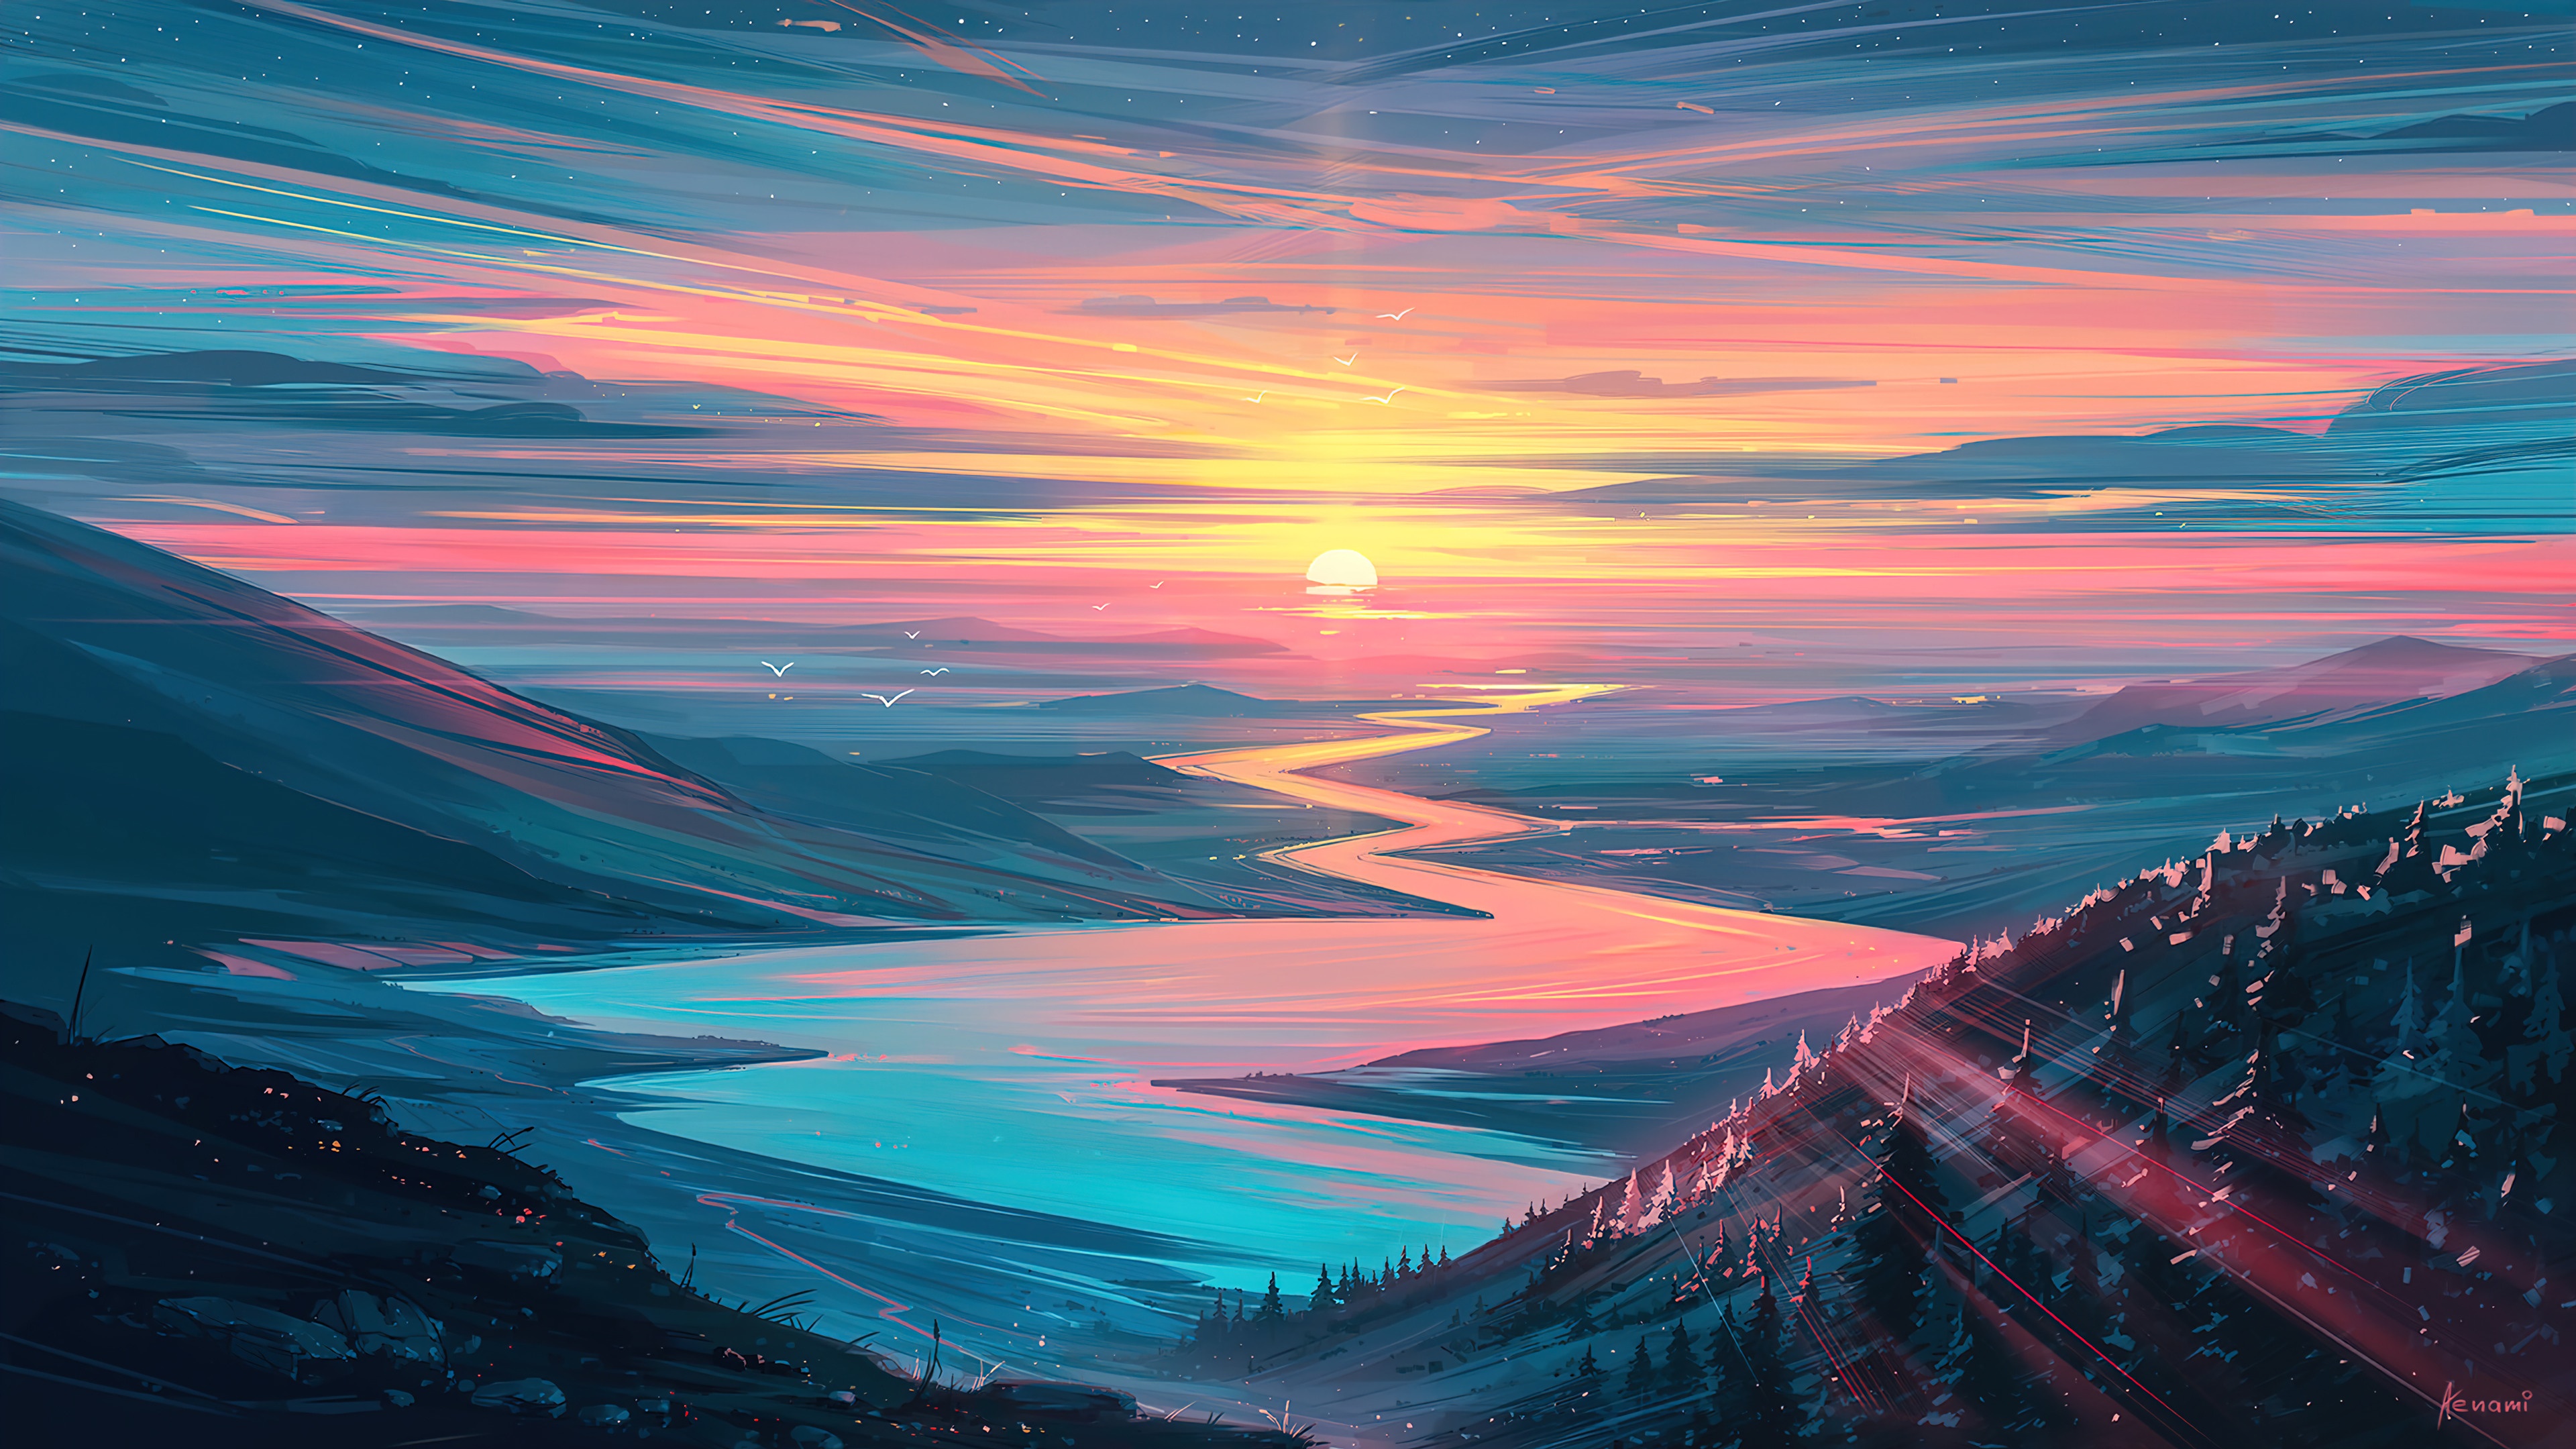 Sunset Digital Art 4K Wallpapers